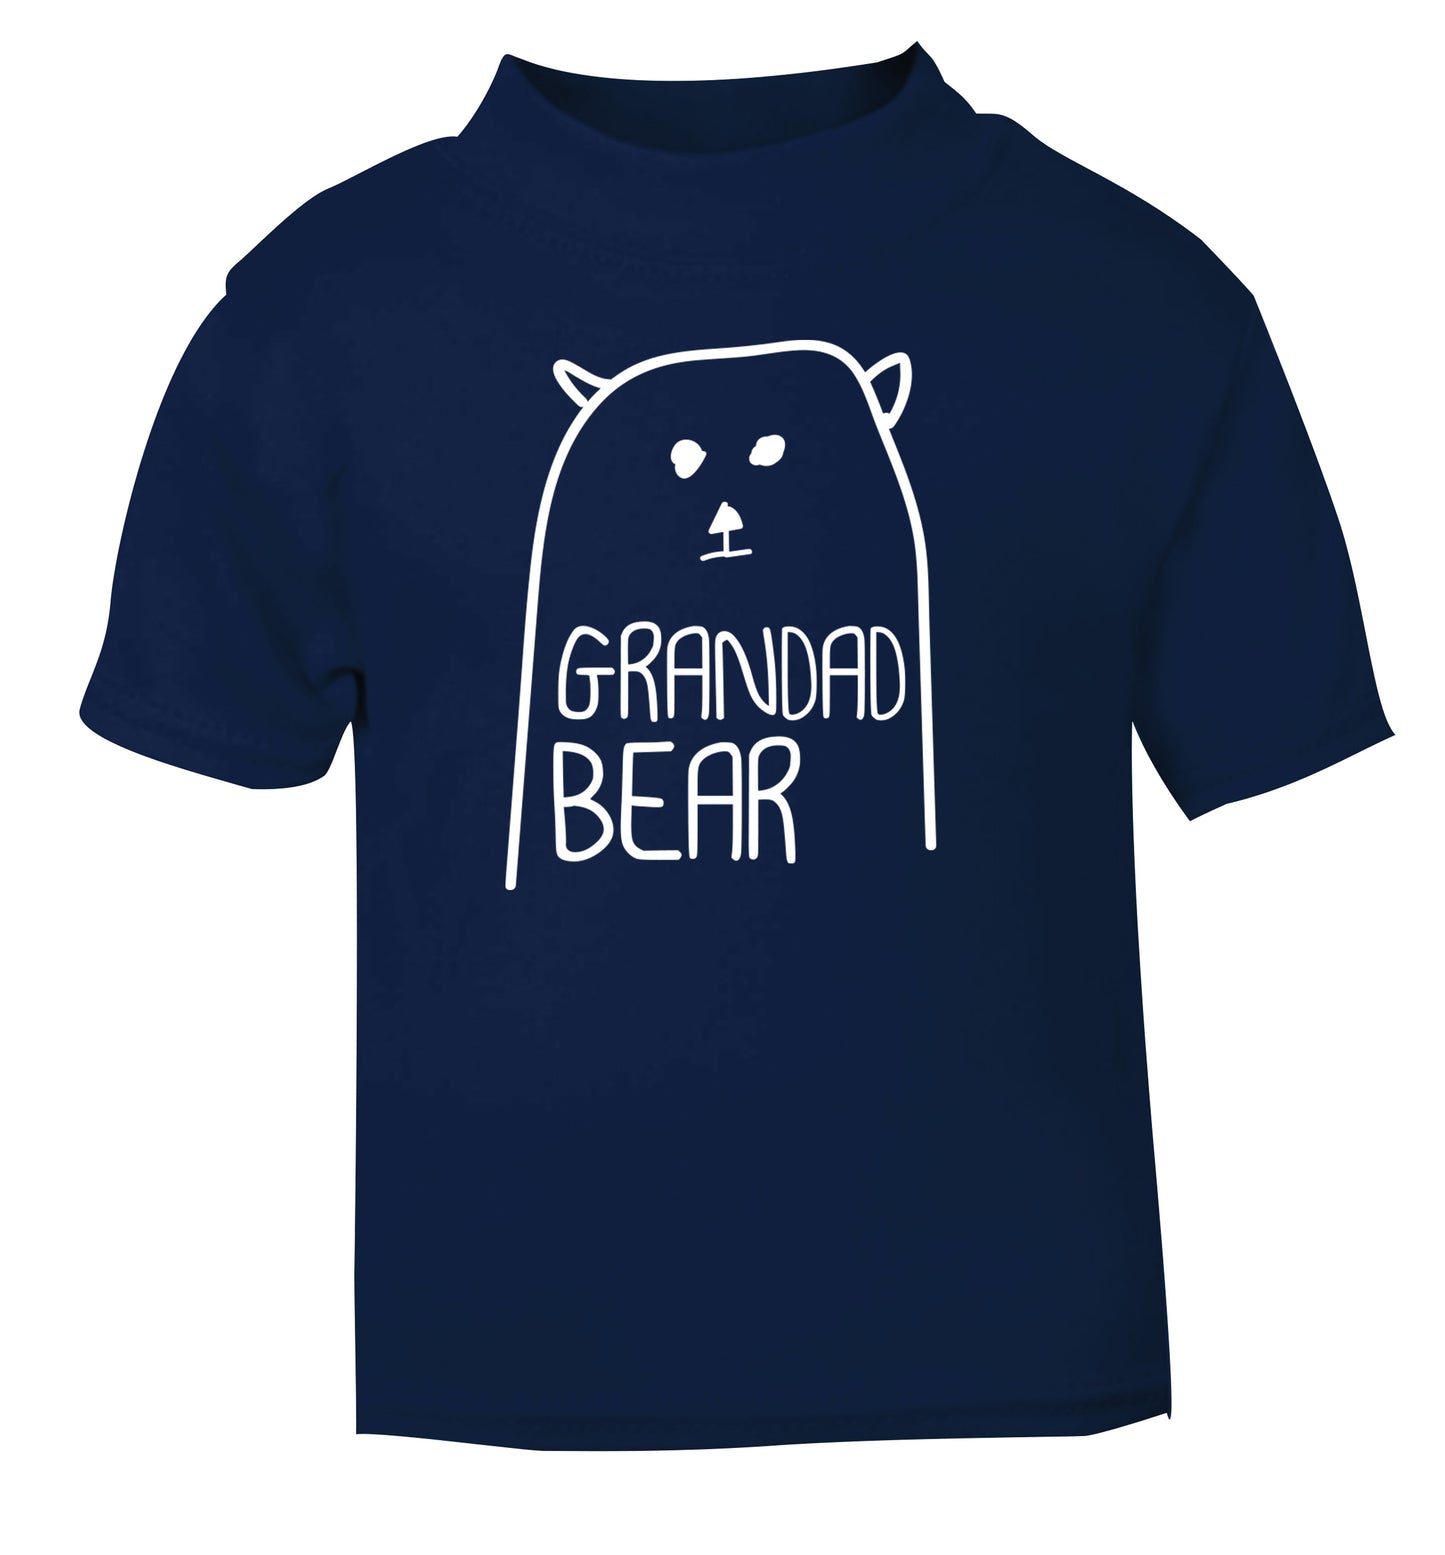 Grandad bear navy Baby Toddler Tshirt 2 Years